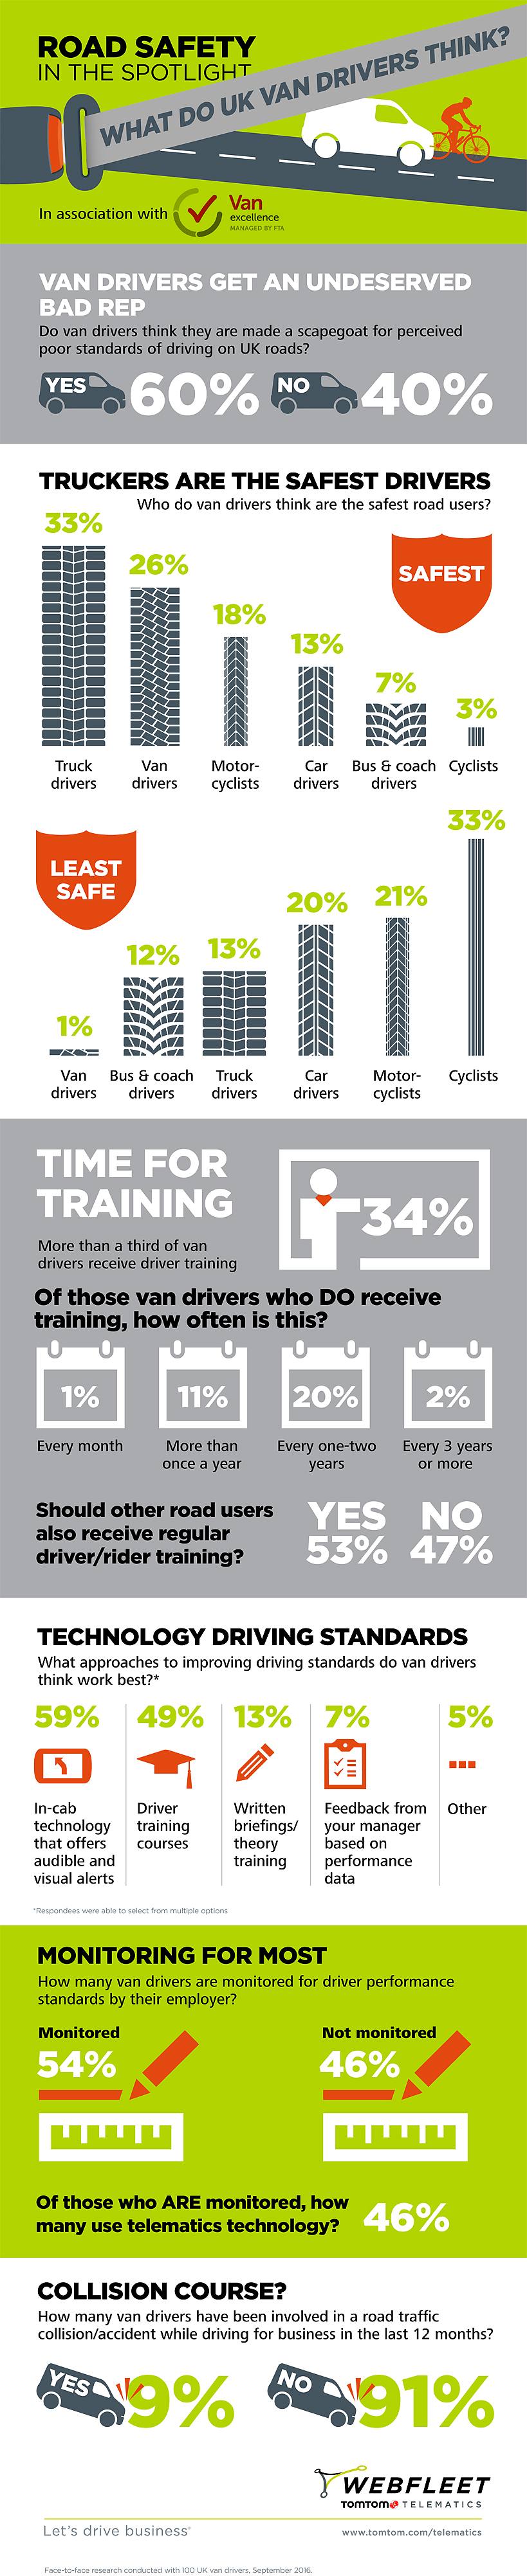 TT van driver research infographic V7